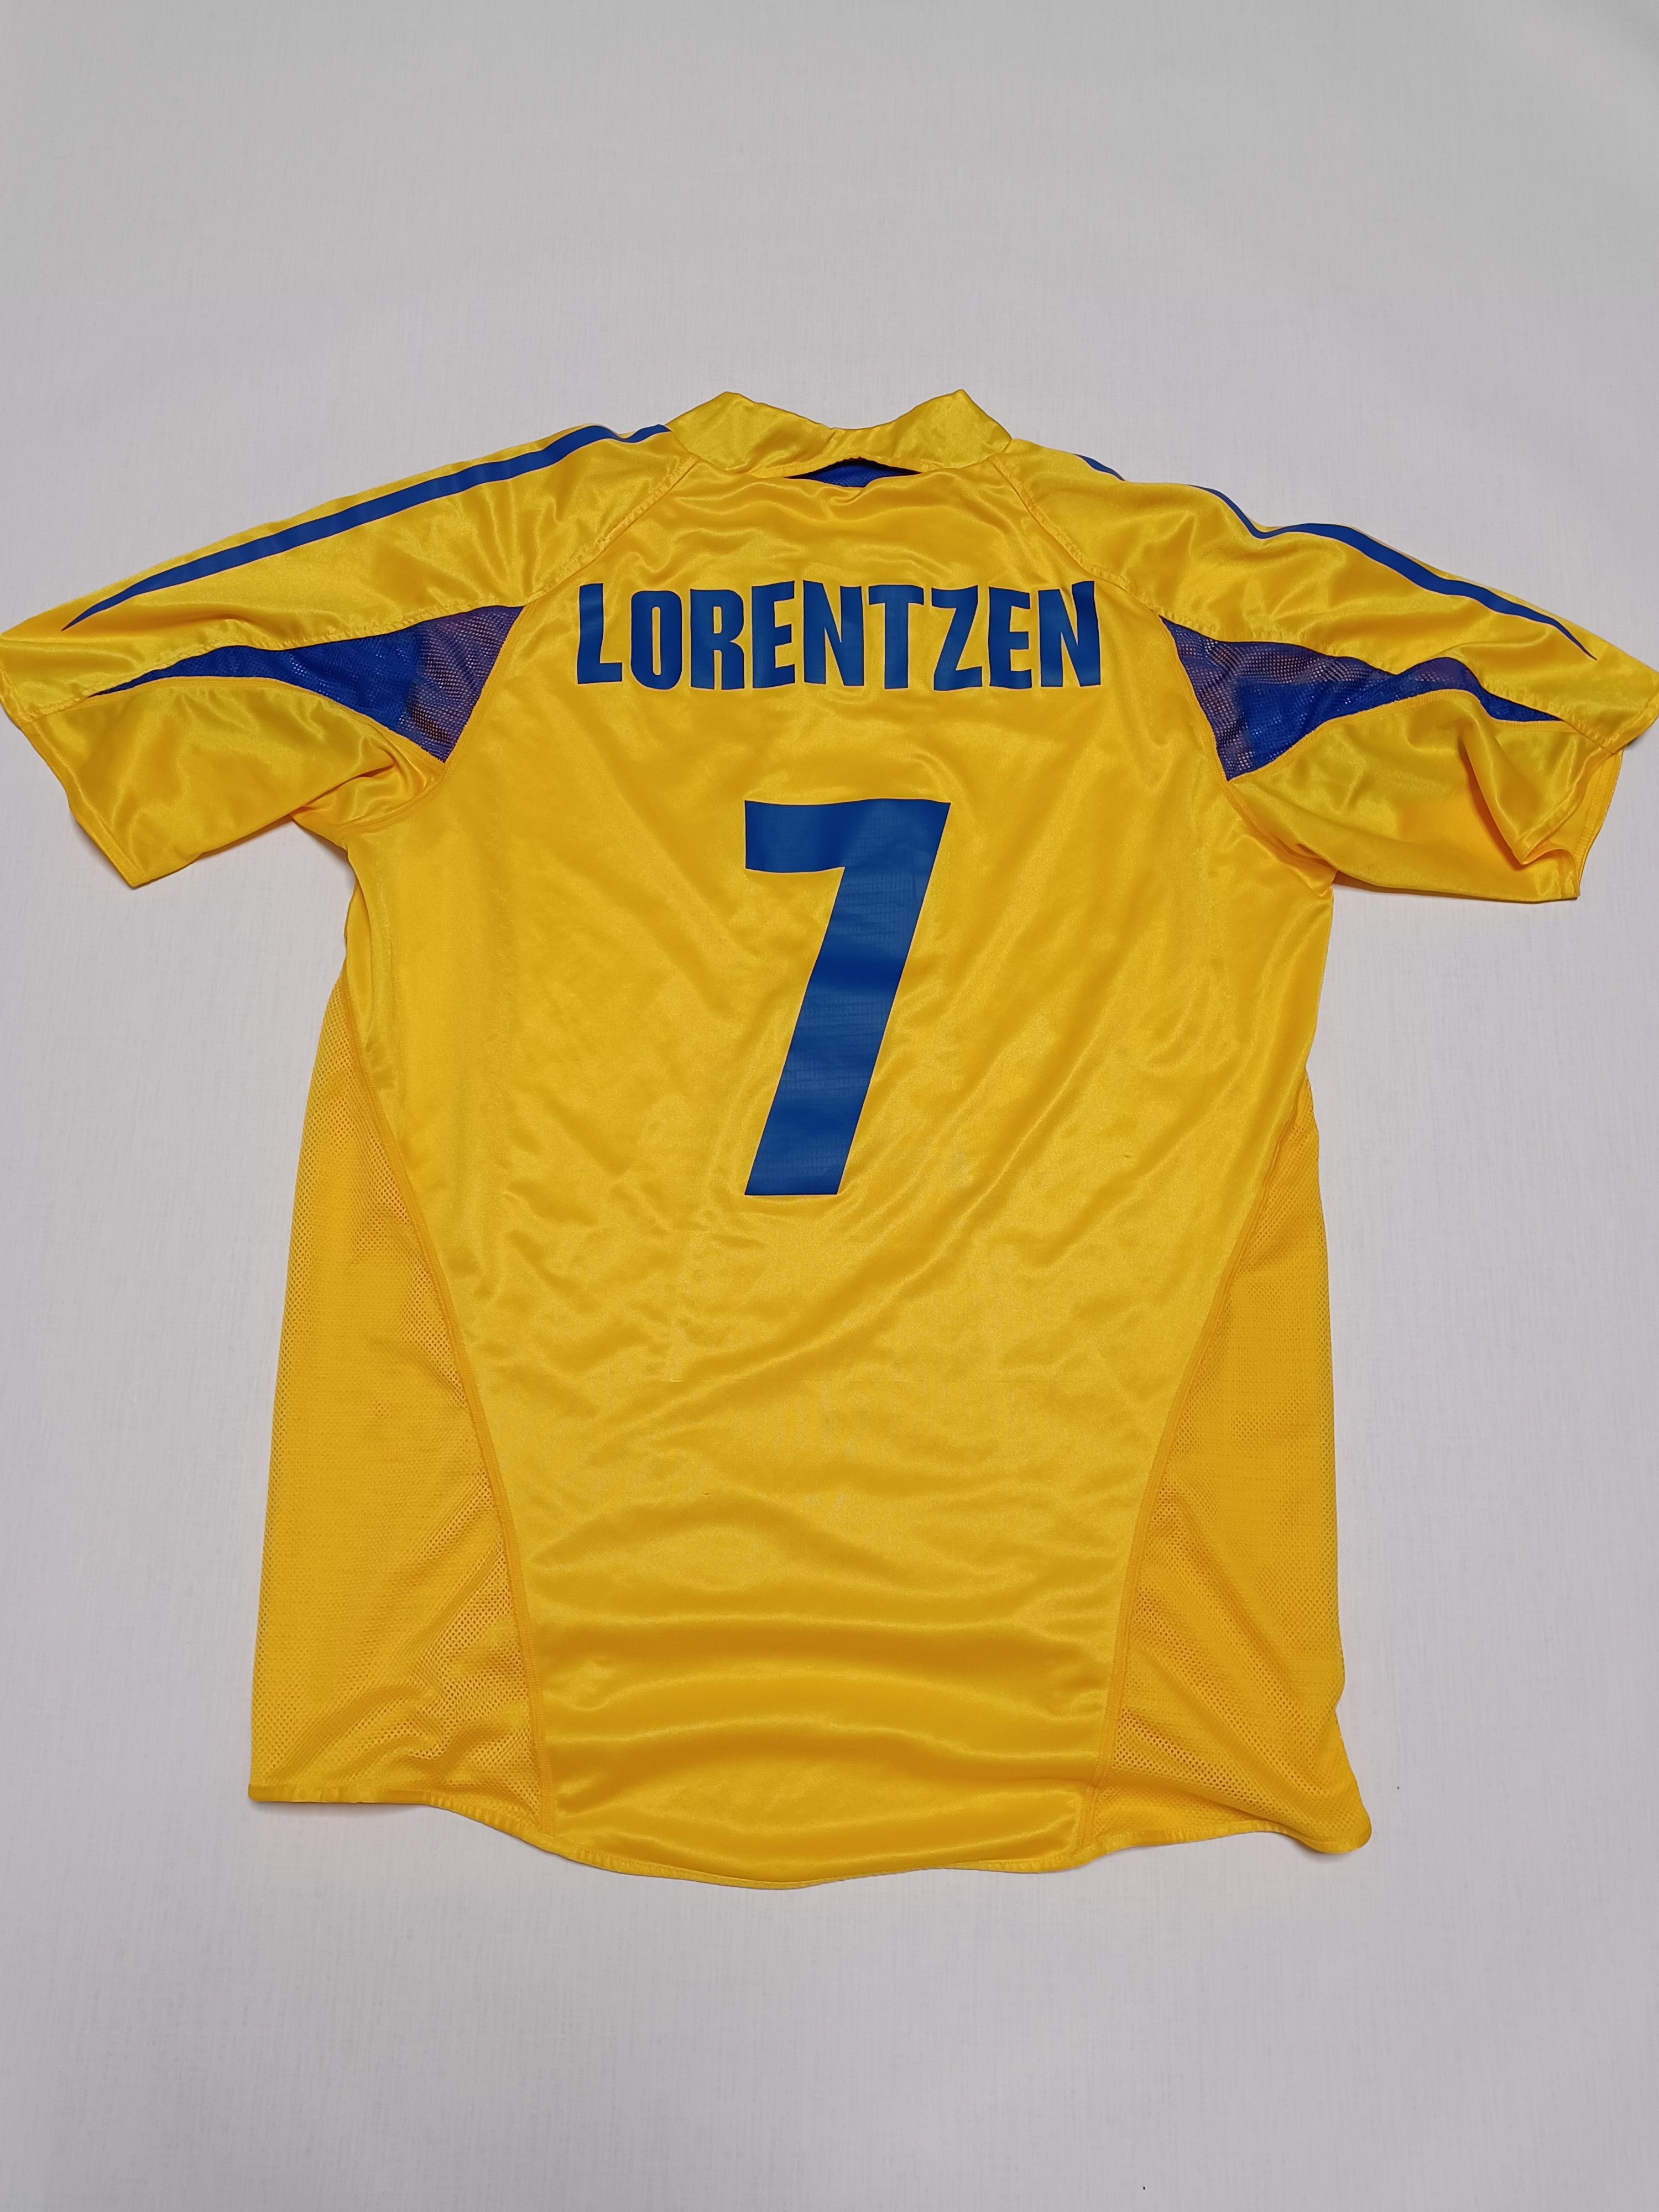 Pre-owned Adidas X Soccer Jersey Brondby Lorentzen Fc Danemark Vintage Soccer Football Jersey In Yellow